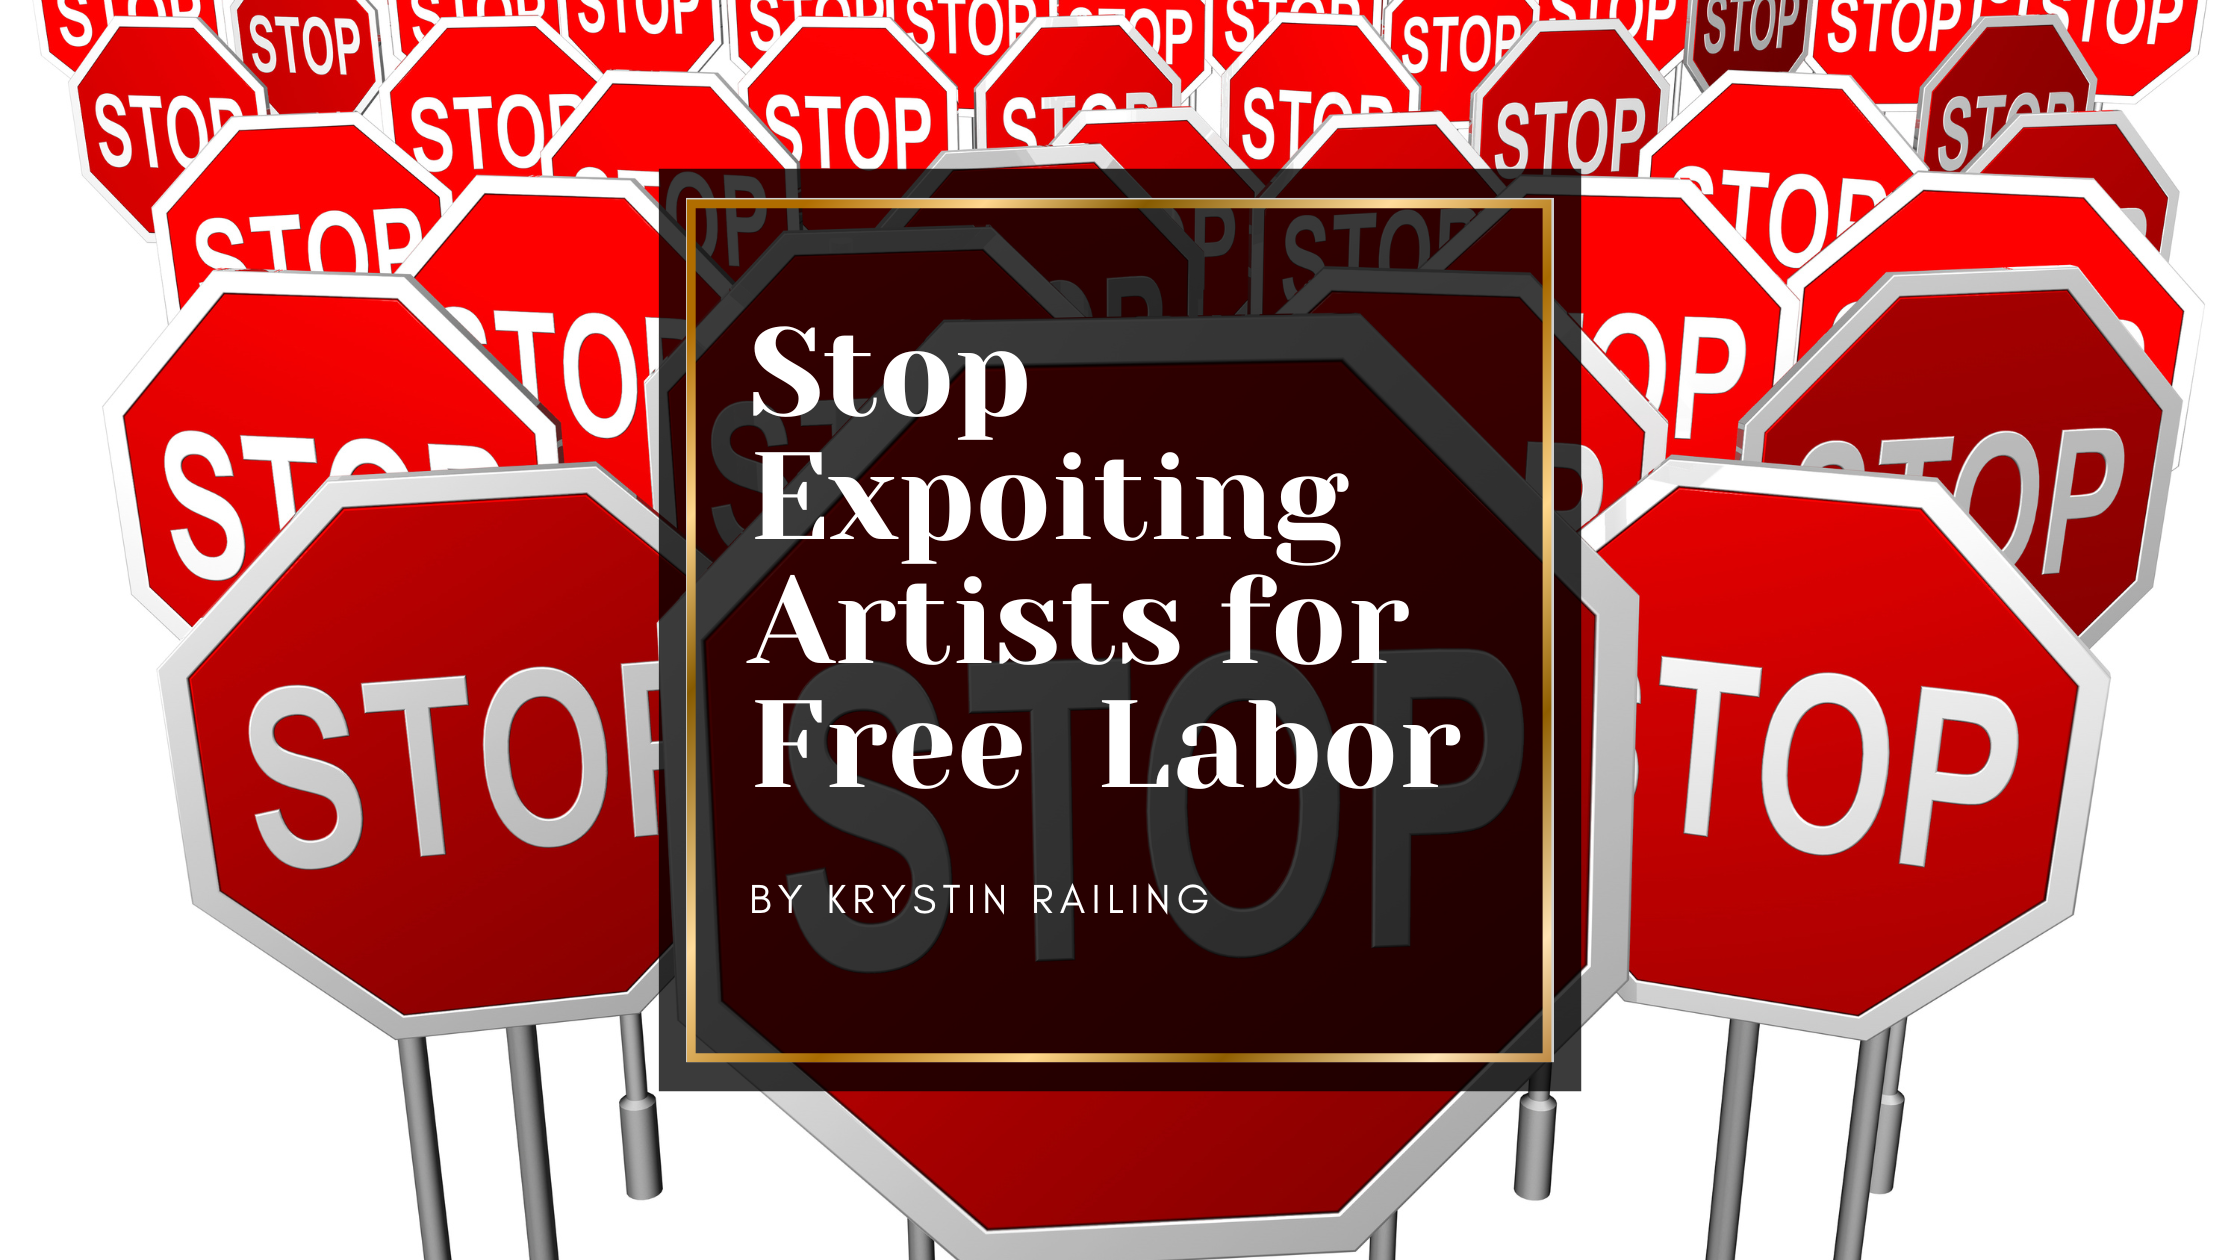 Artists =/= Free Labor